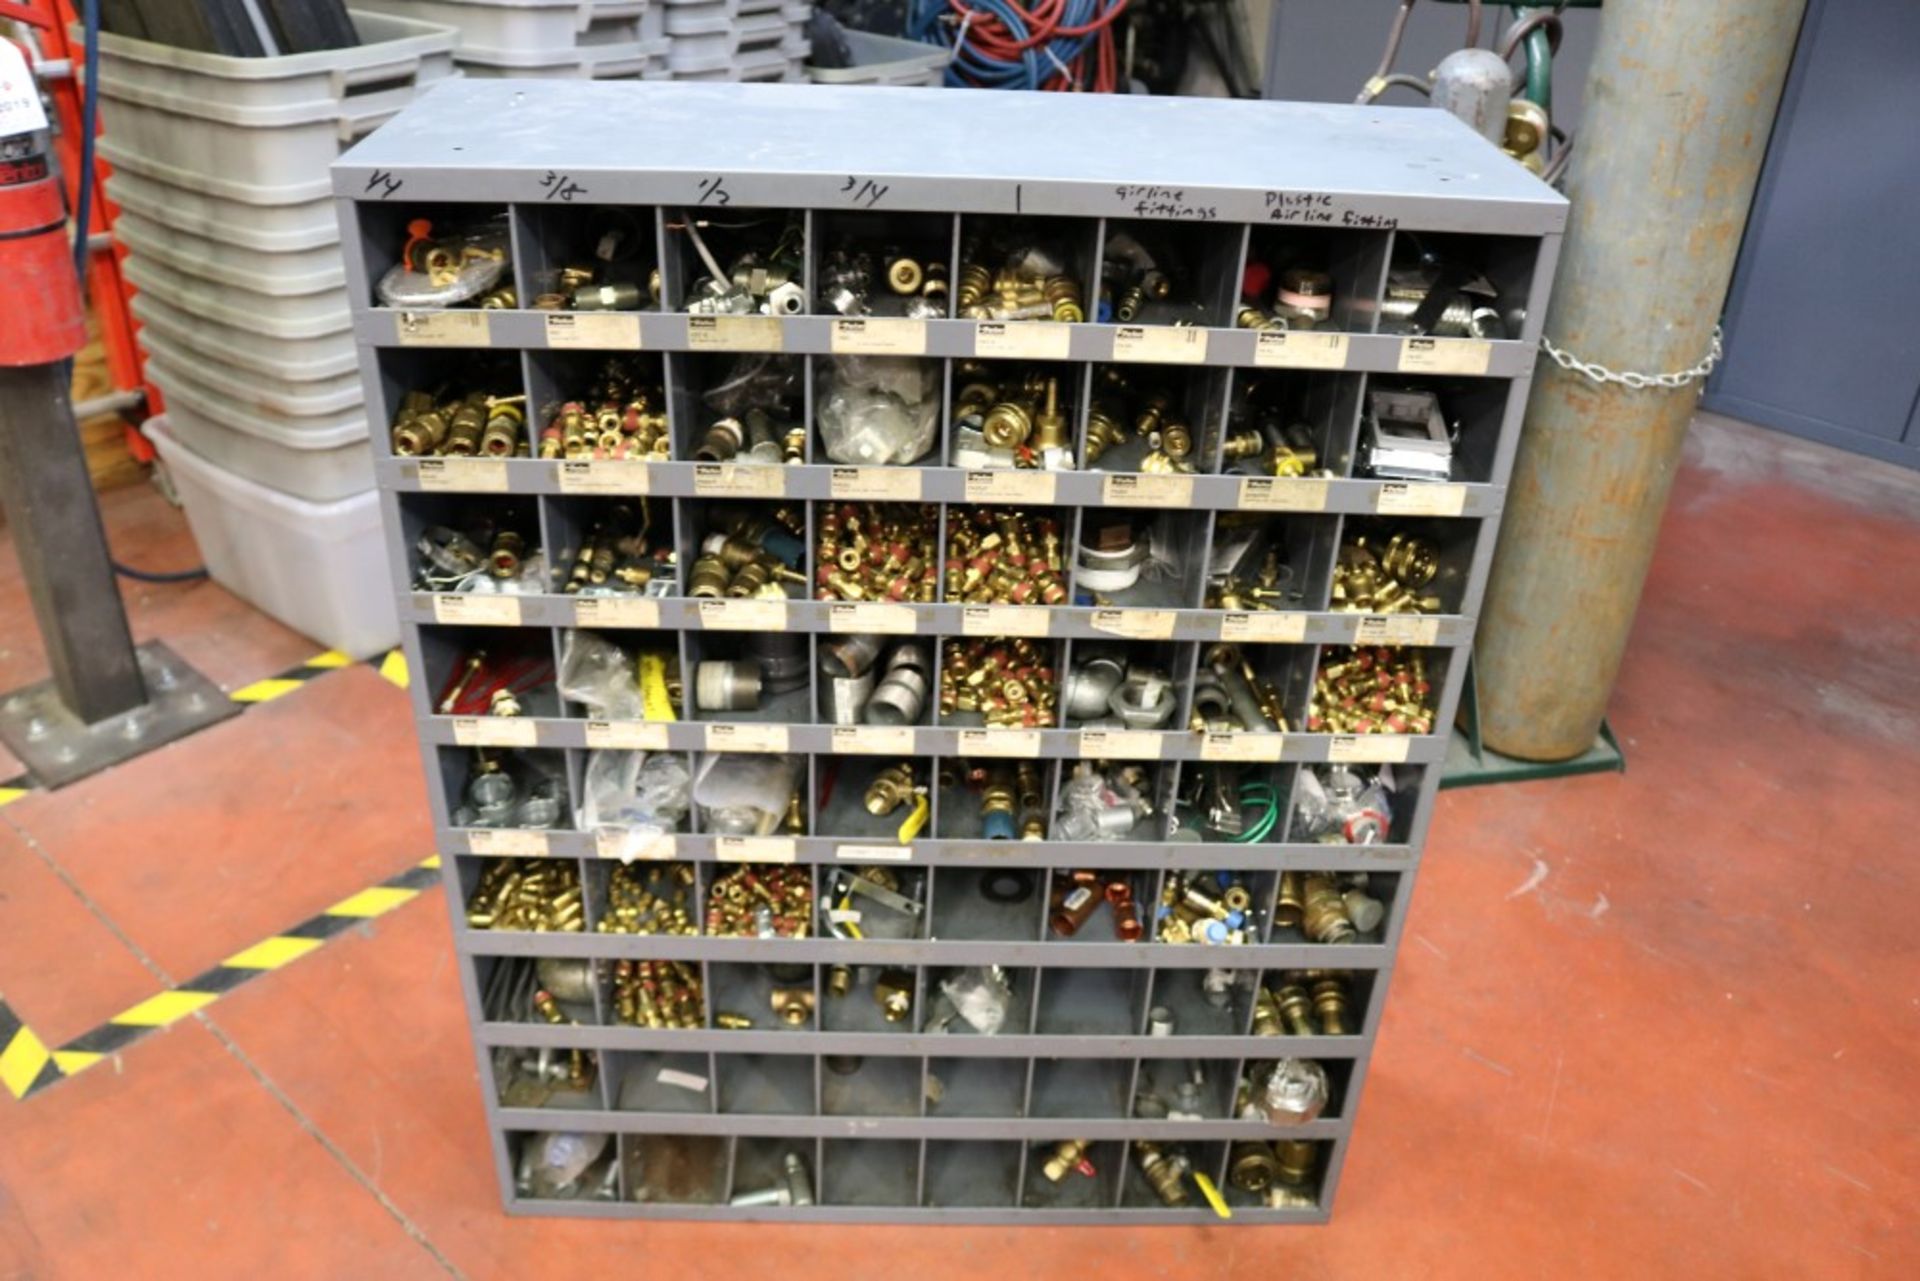 Large Metal Storage Bin 12" x 34" x 42" - 72 bins full of Various Water and Air Fittings